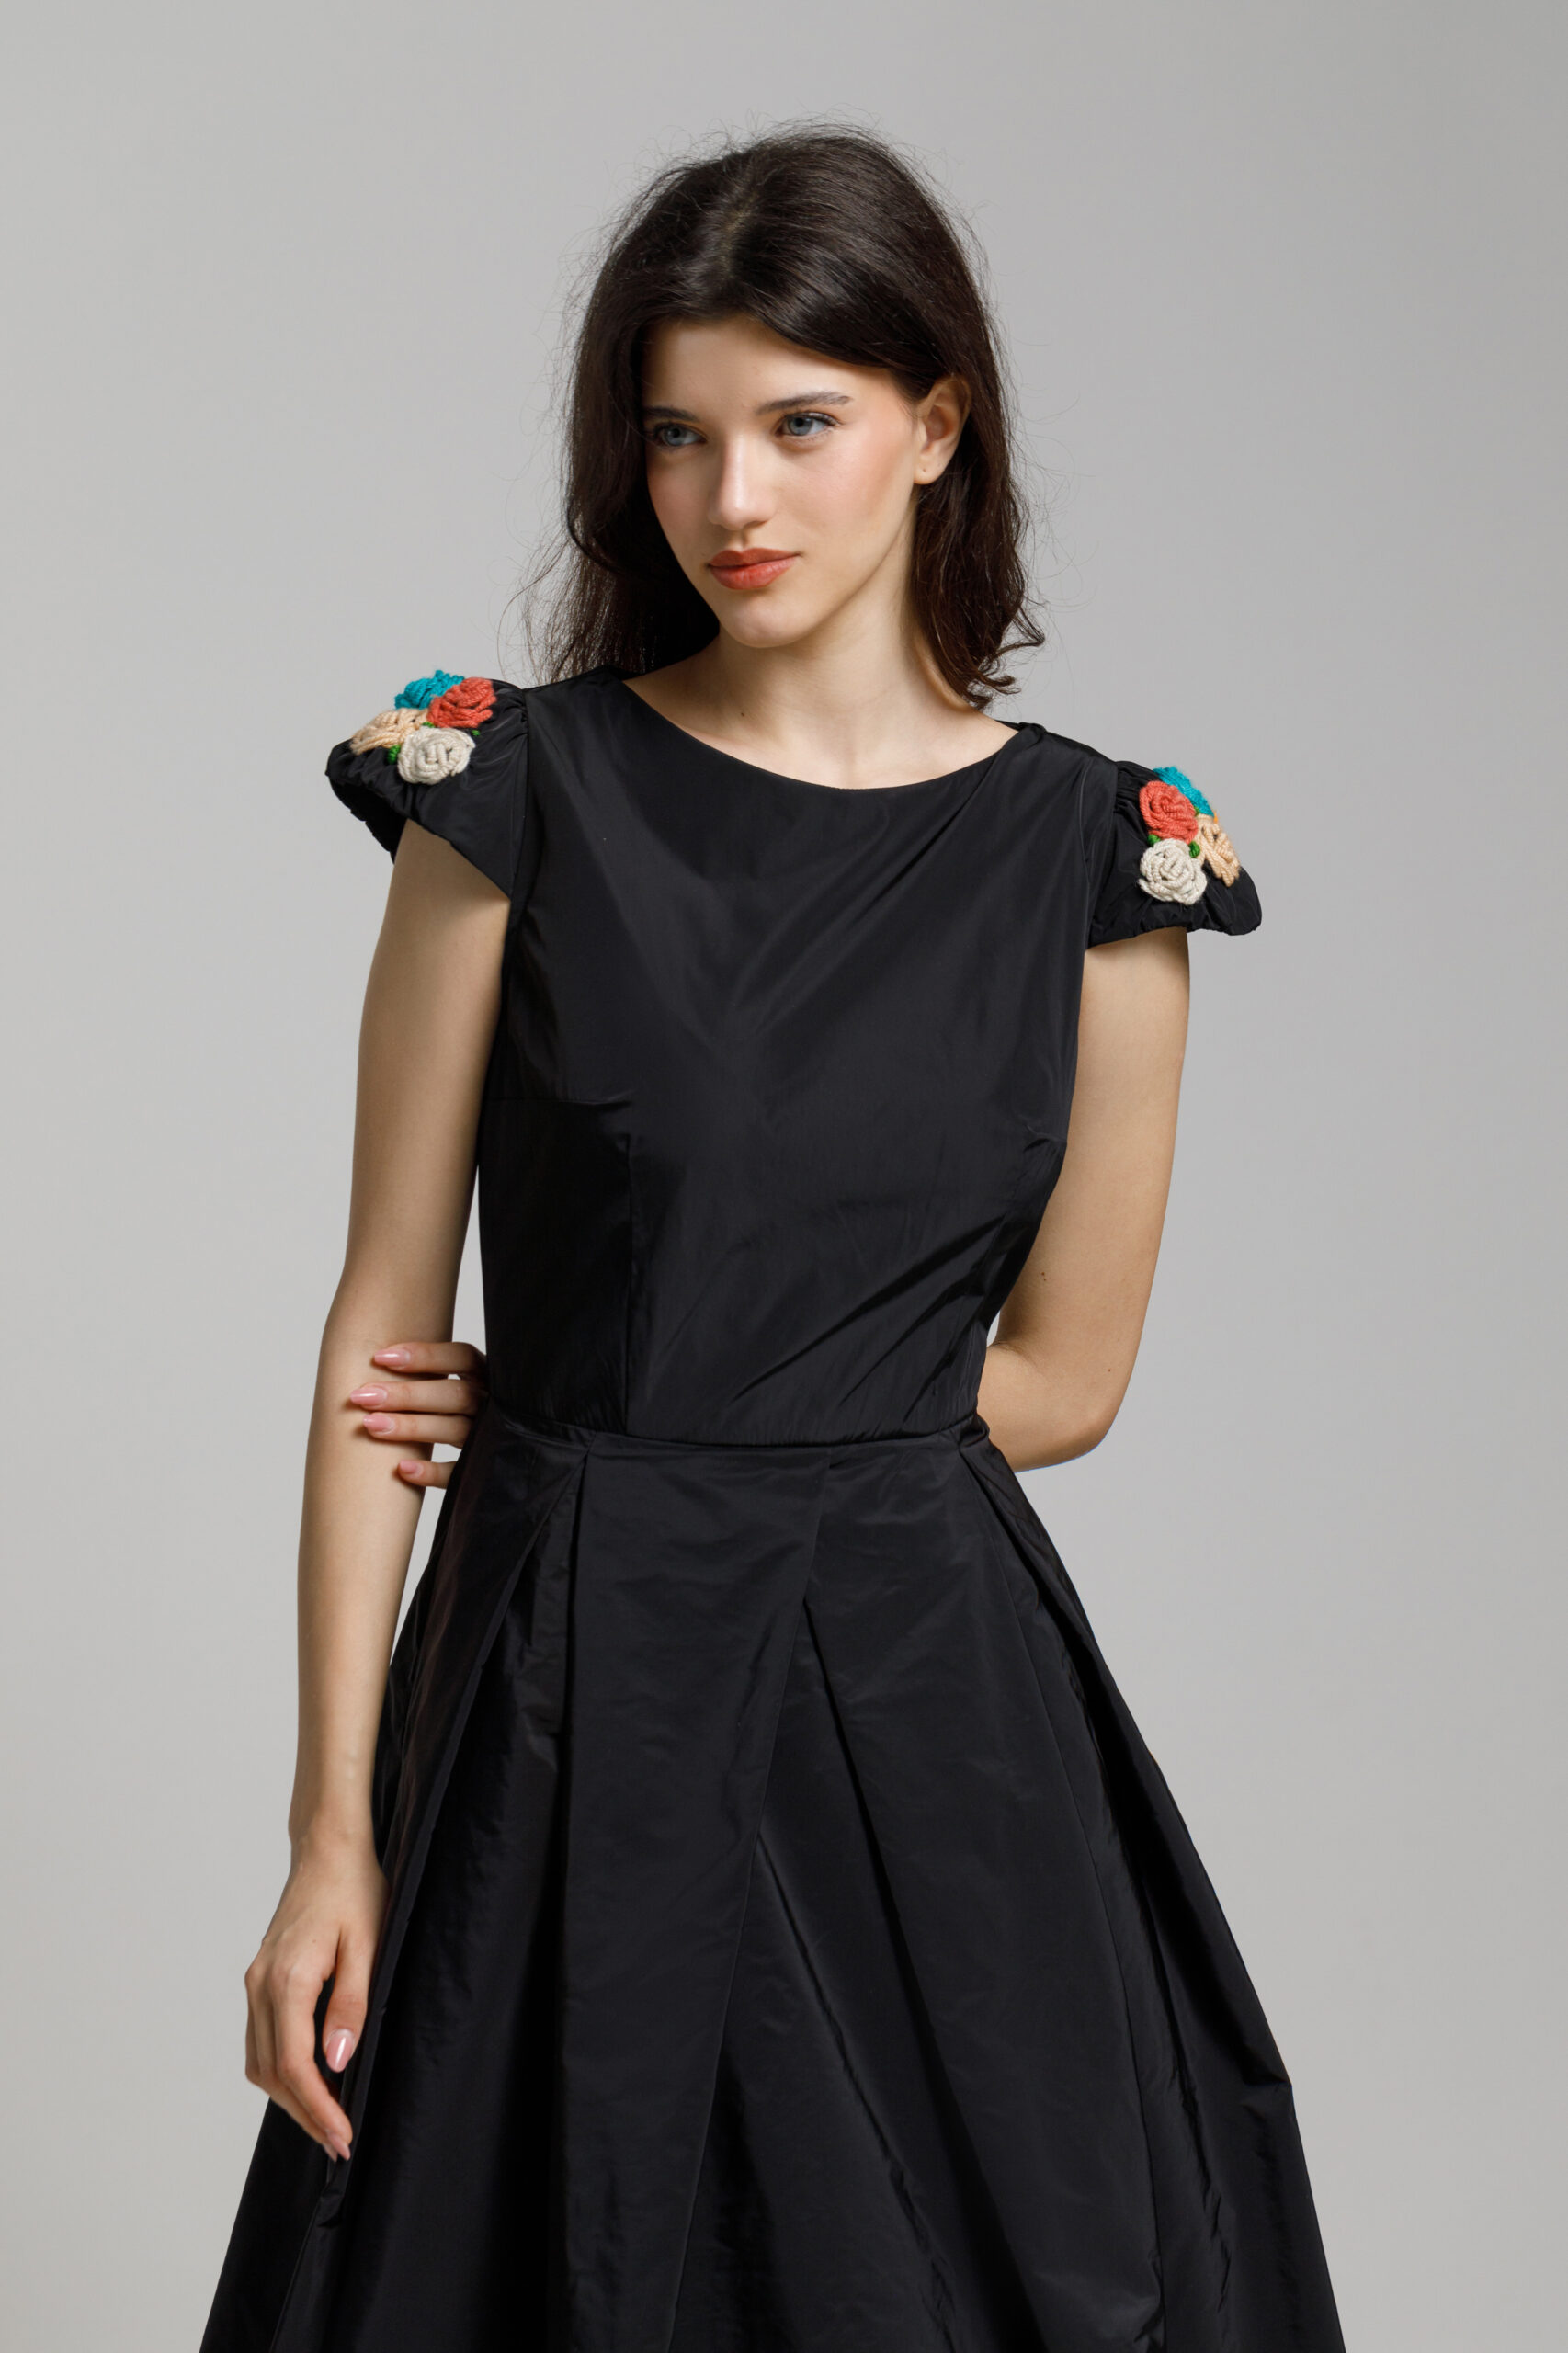 CHLOE black dress with embroidery. Natural fabrics, original design, handmade embroidery